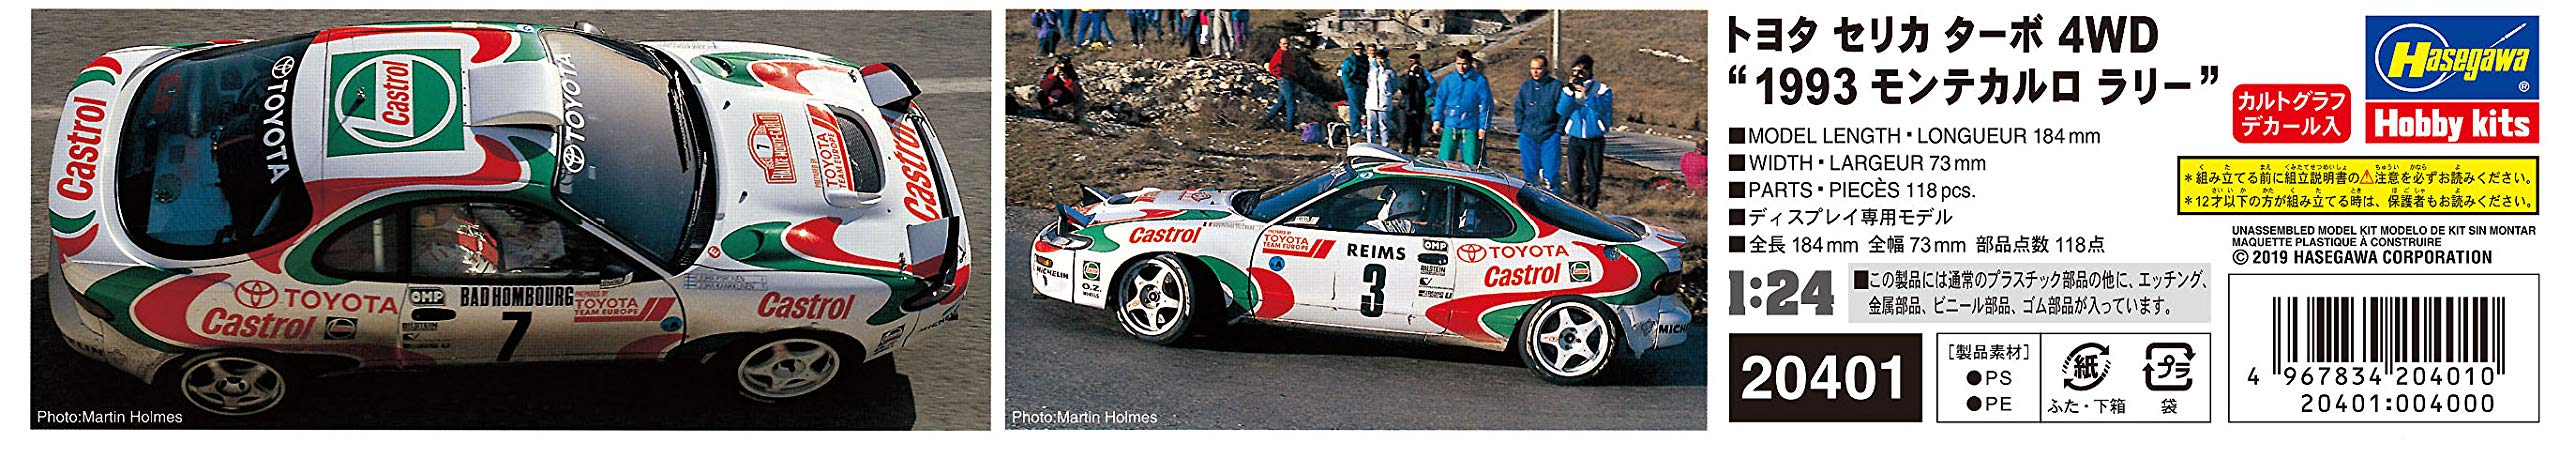 HASEGAWA 20401 Toyota Celica Turbo 4WD 1993 Rallye Monte Carlo Bausatz im Maßstab 1:24